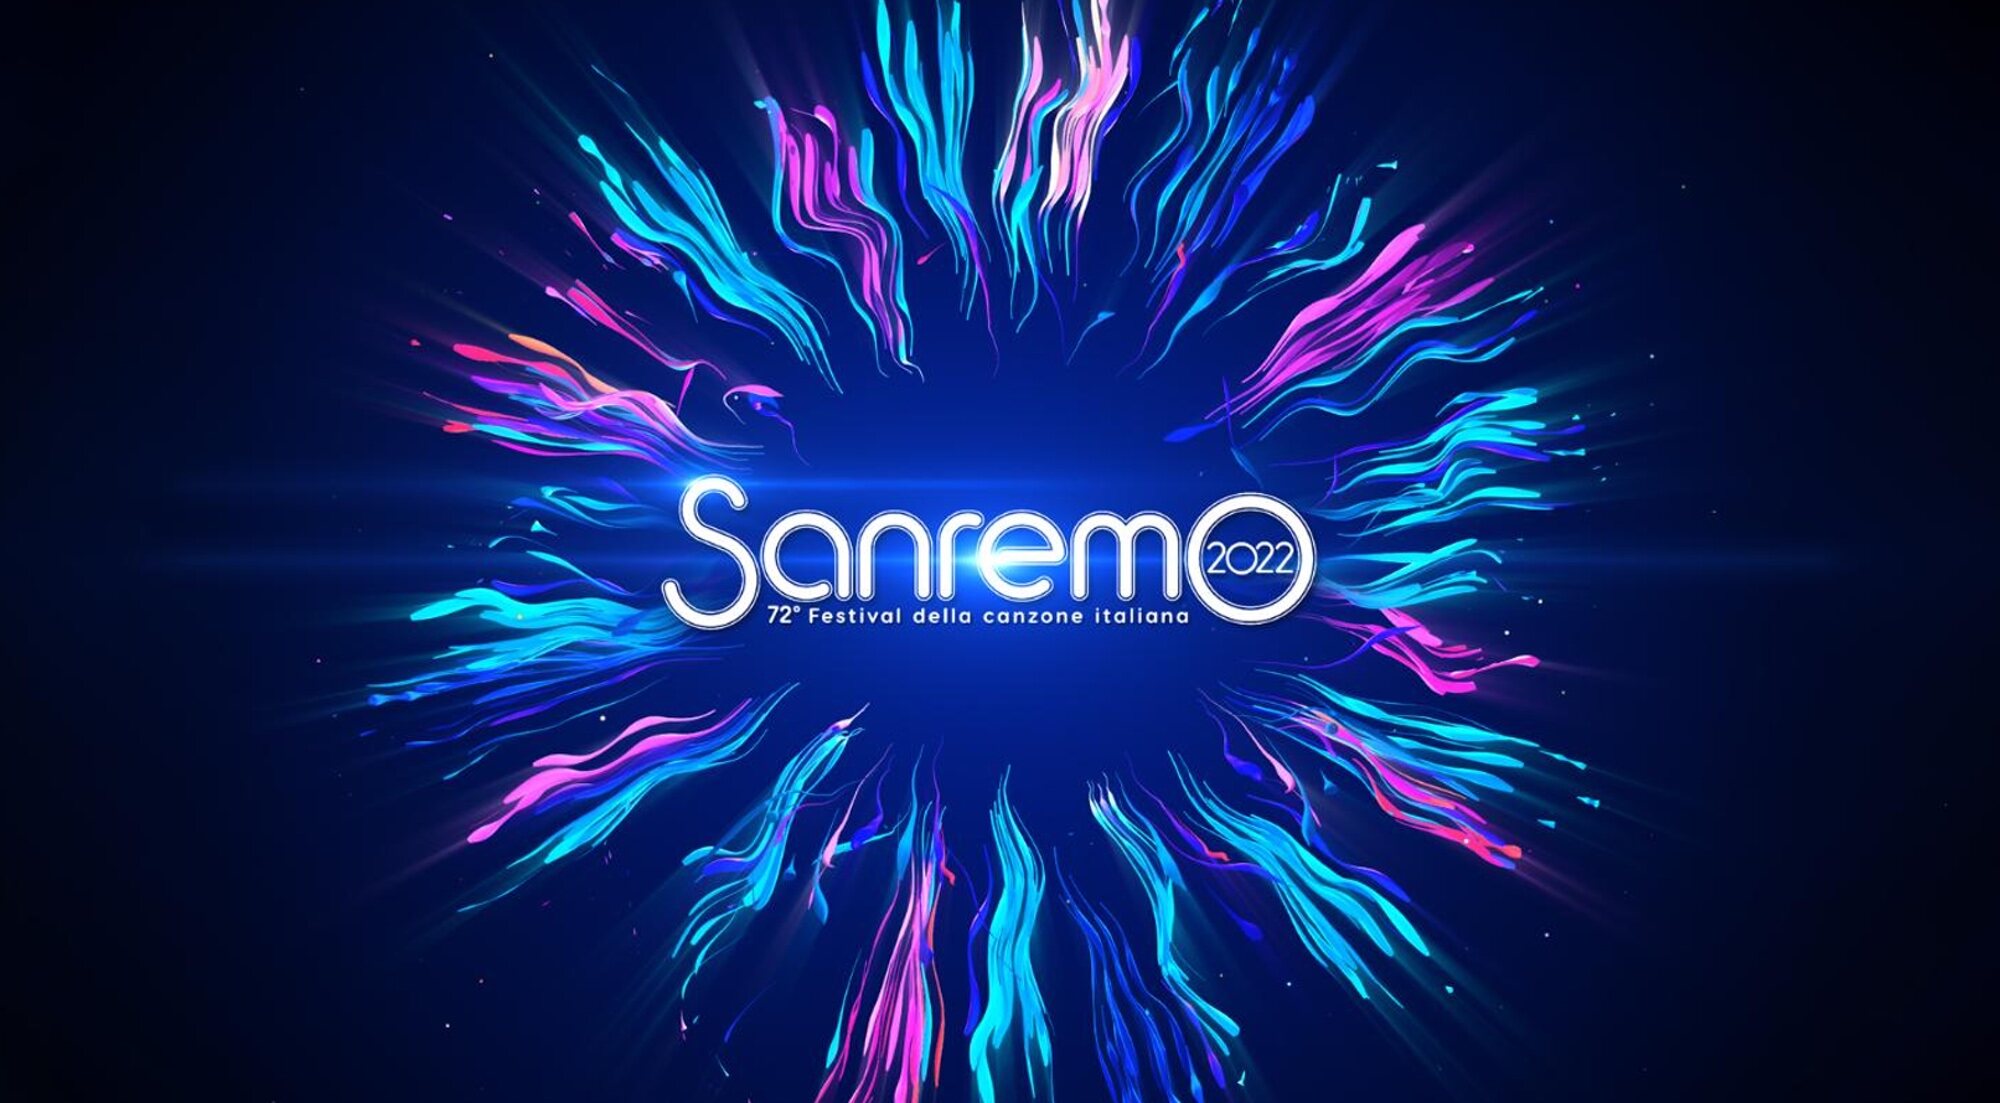 Logotipo del Festival de San Remo 2022